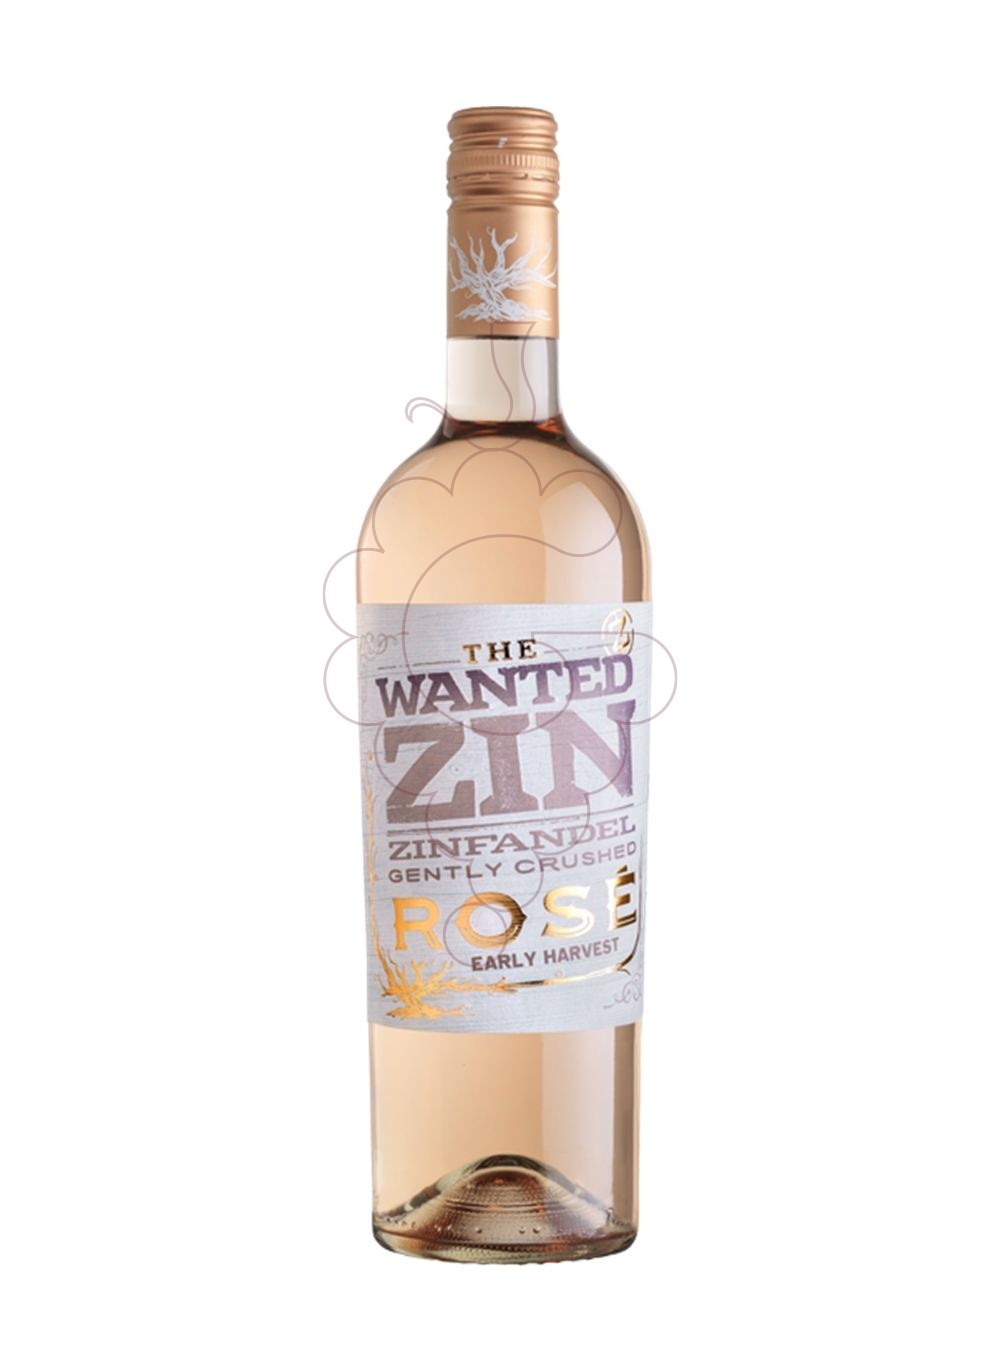 Foto The wanted zin rose 75 cl vino rosado